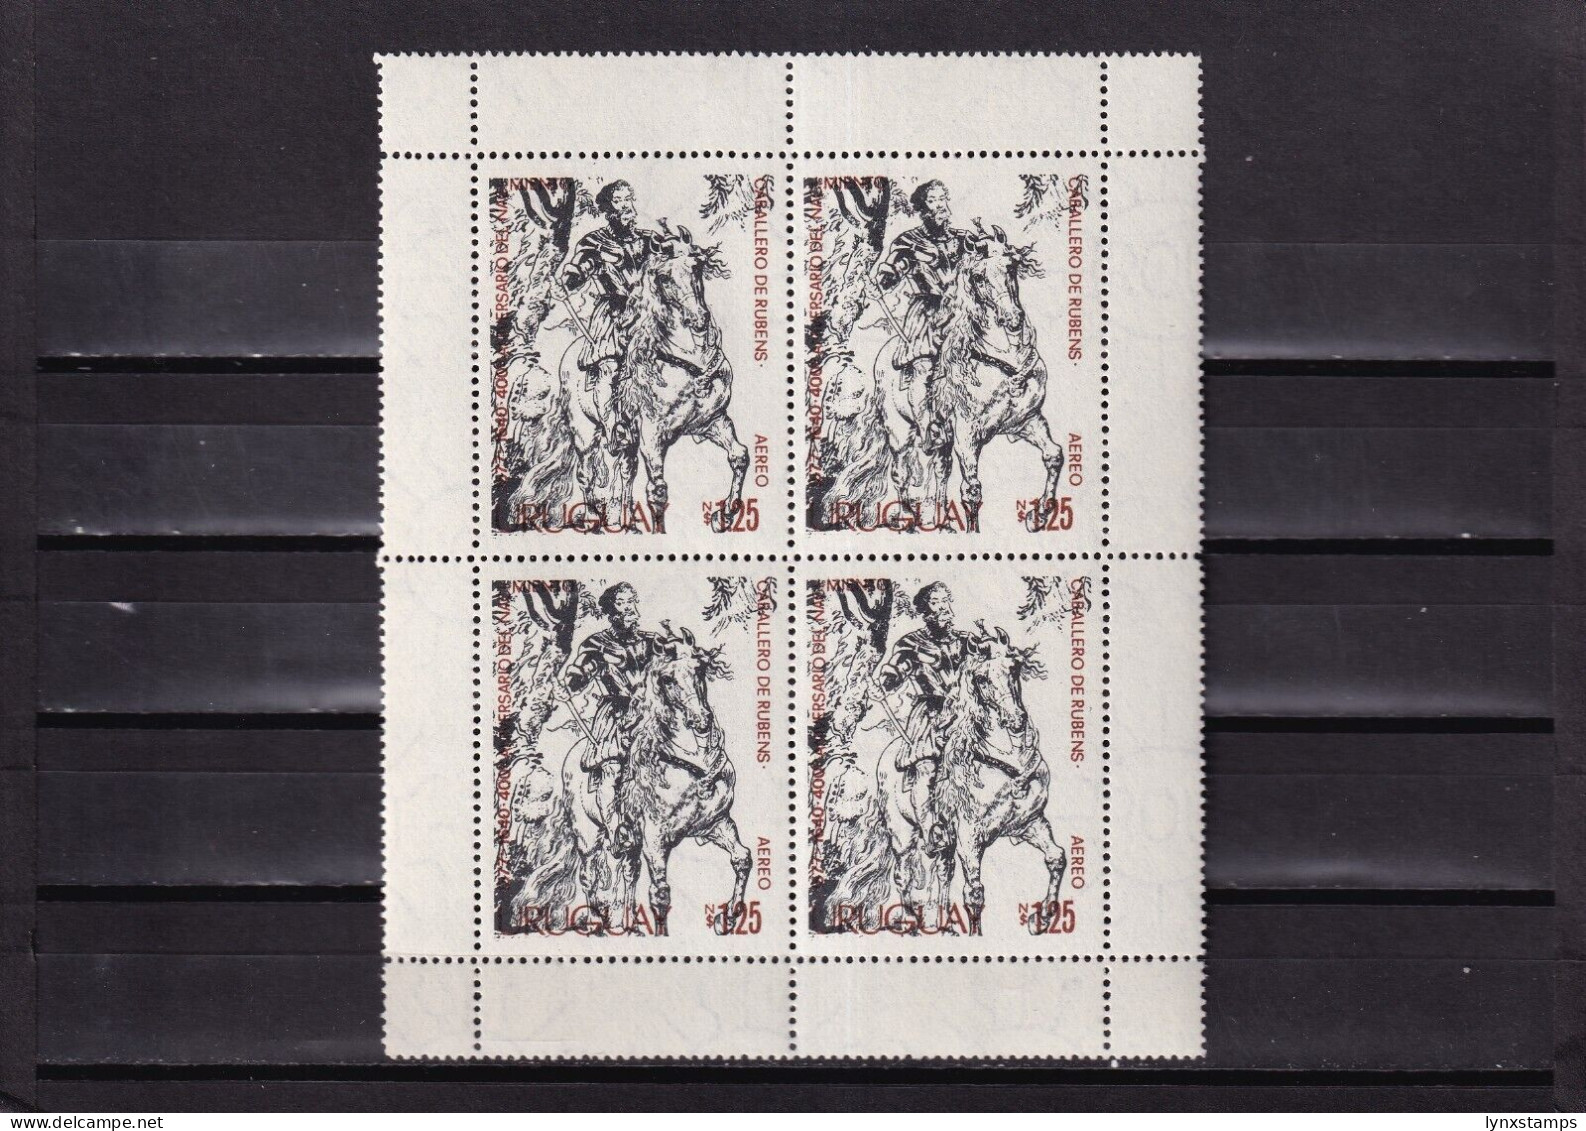 ER03 Uruguay 1978 Duke Of Lerma By Rubens MNH Stamps - Uruguay